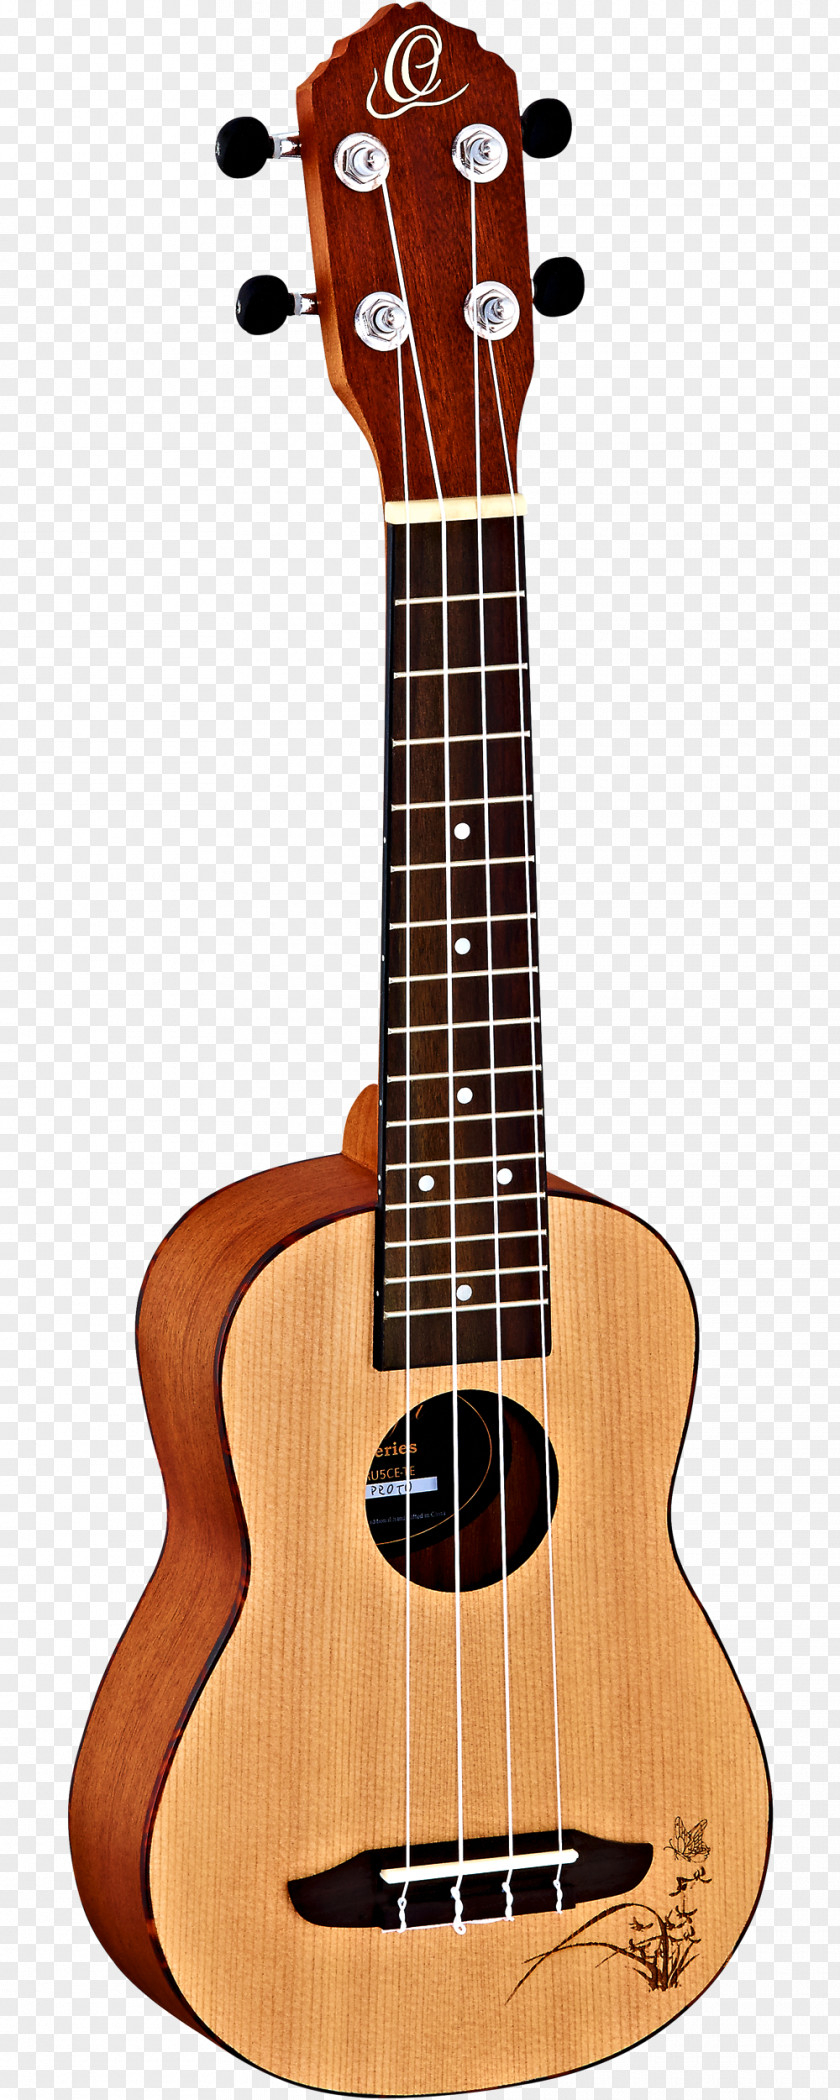 Amancio Ortega Ukulele FA Finale, Inc. Musical Instruments Guitar Guitalele PNG